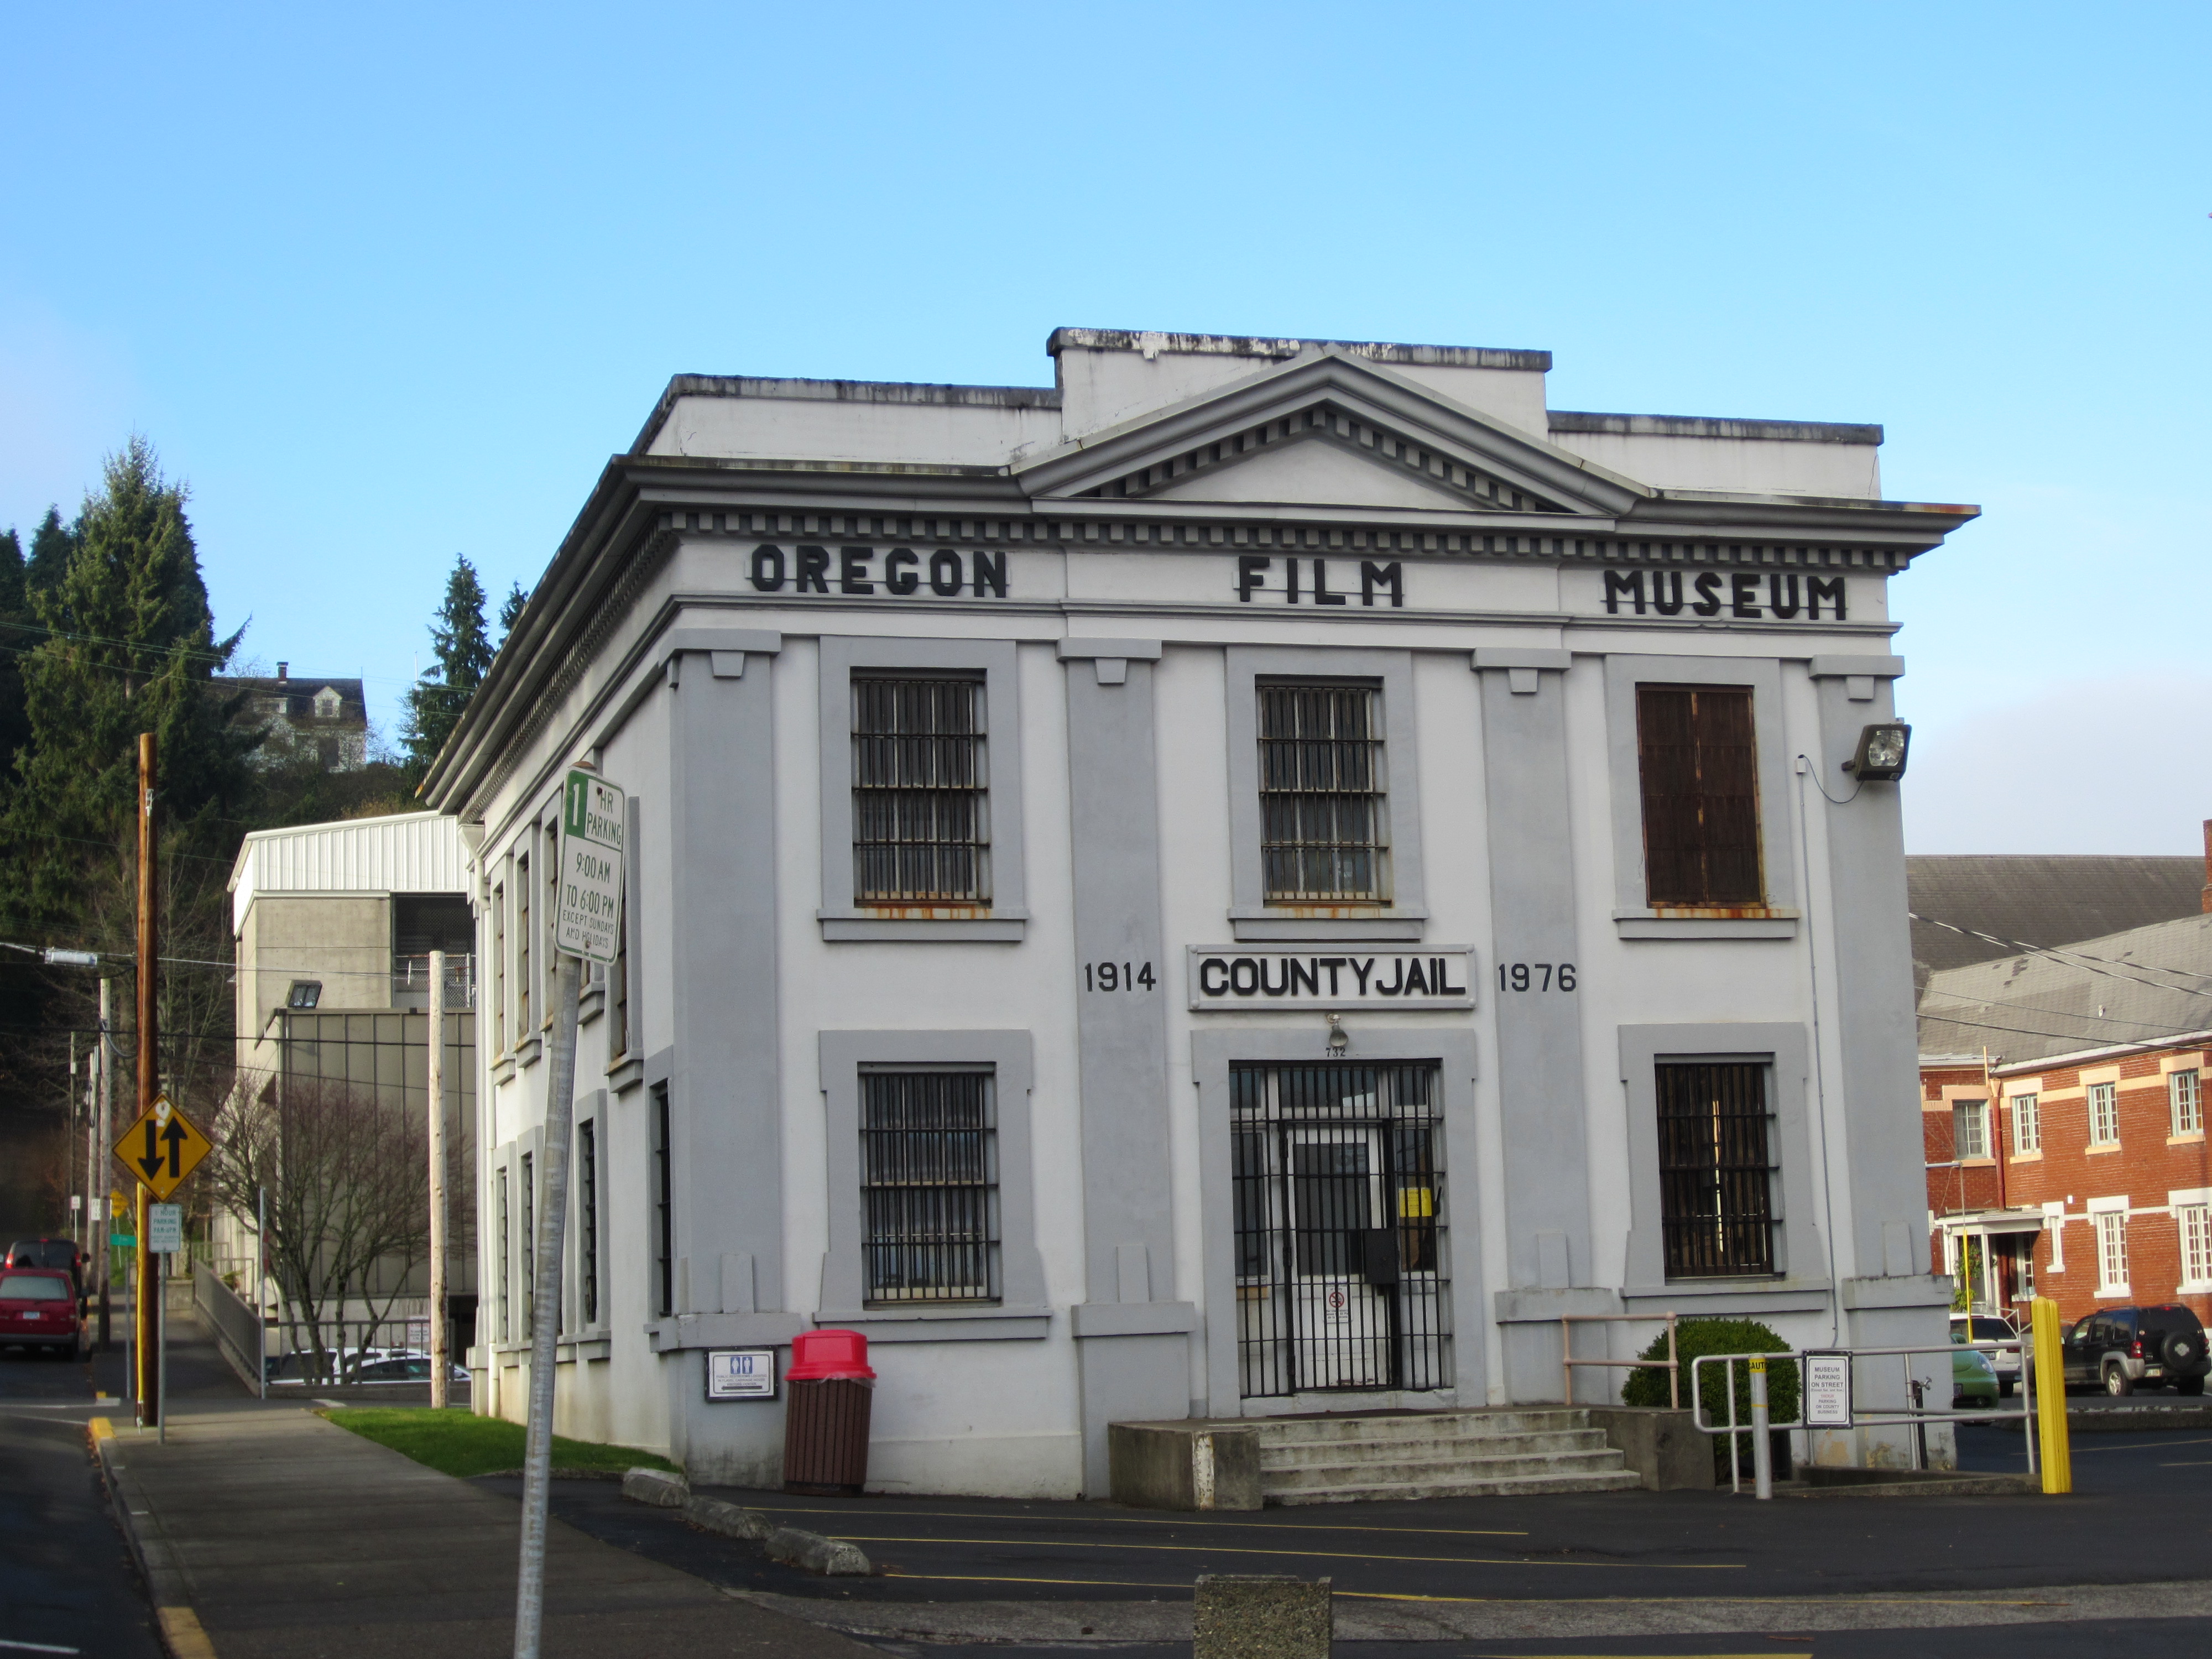 Oregon_Film_Museum,_County_Jail,_Astoria